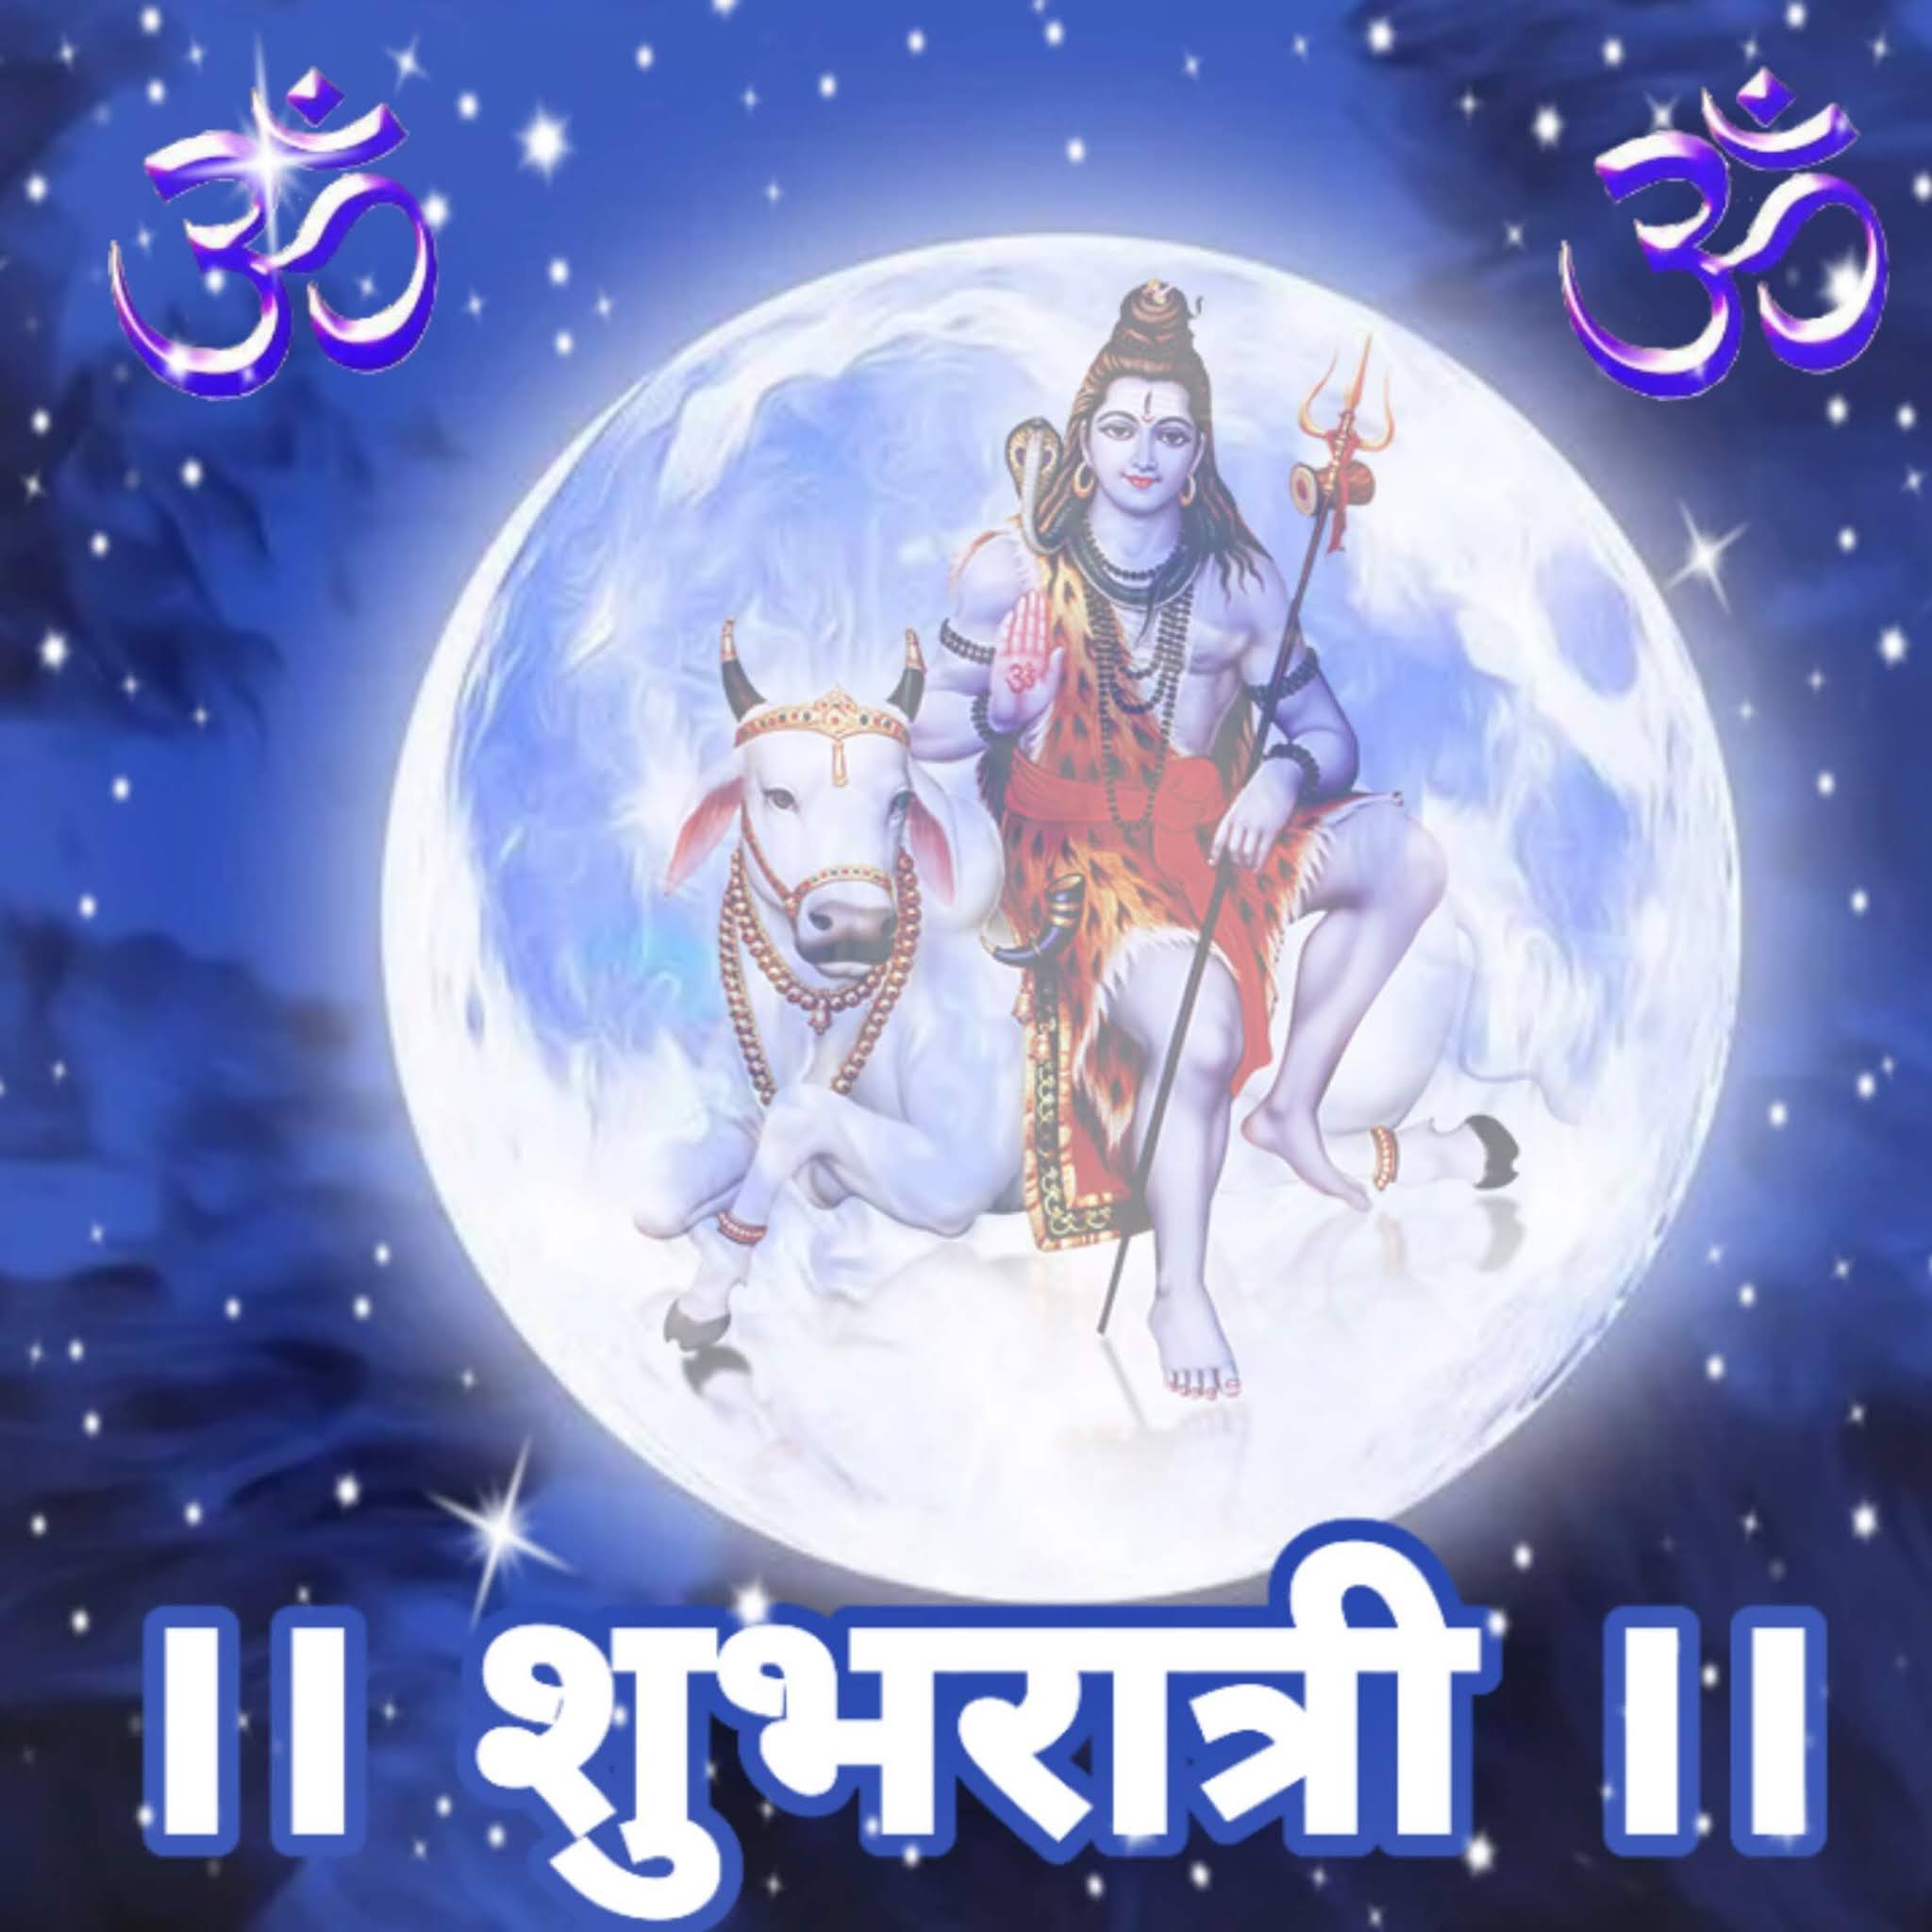 Good Night lord Shiva image free download wishes image